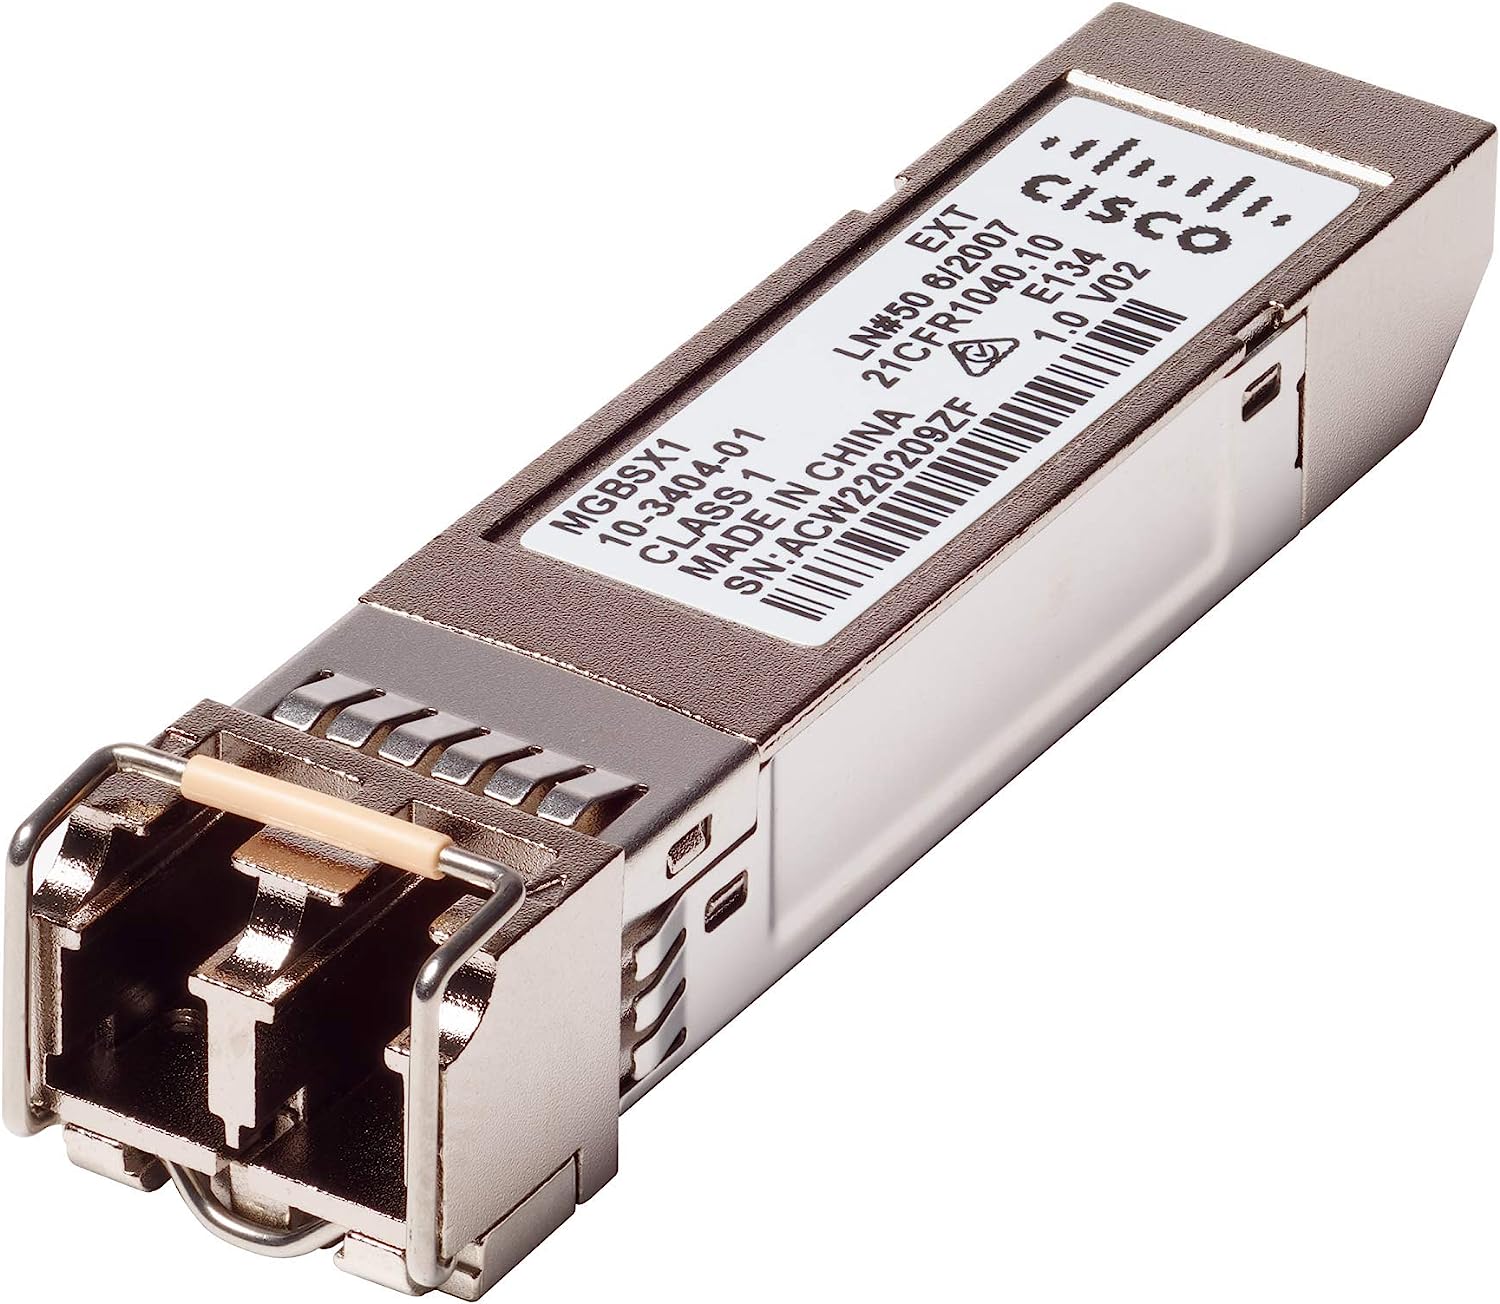 Cisco MGBSX1 SFP Transceiver, Gigabit Ethernet (GbE) 1000BASE-SX Mini-GBIC (MGBSX1)